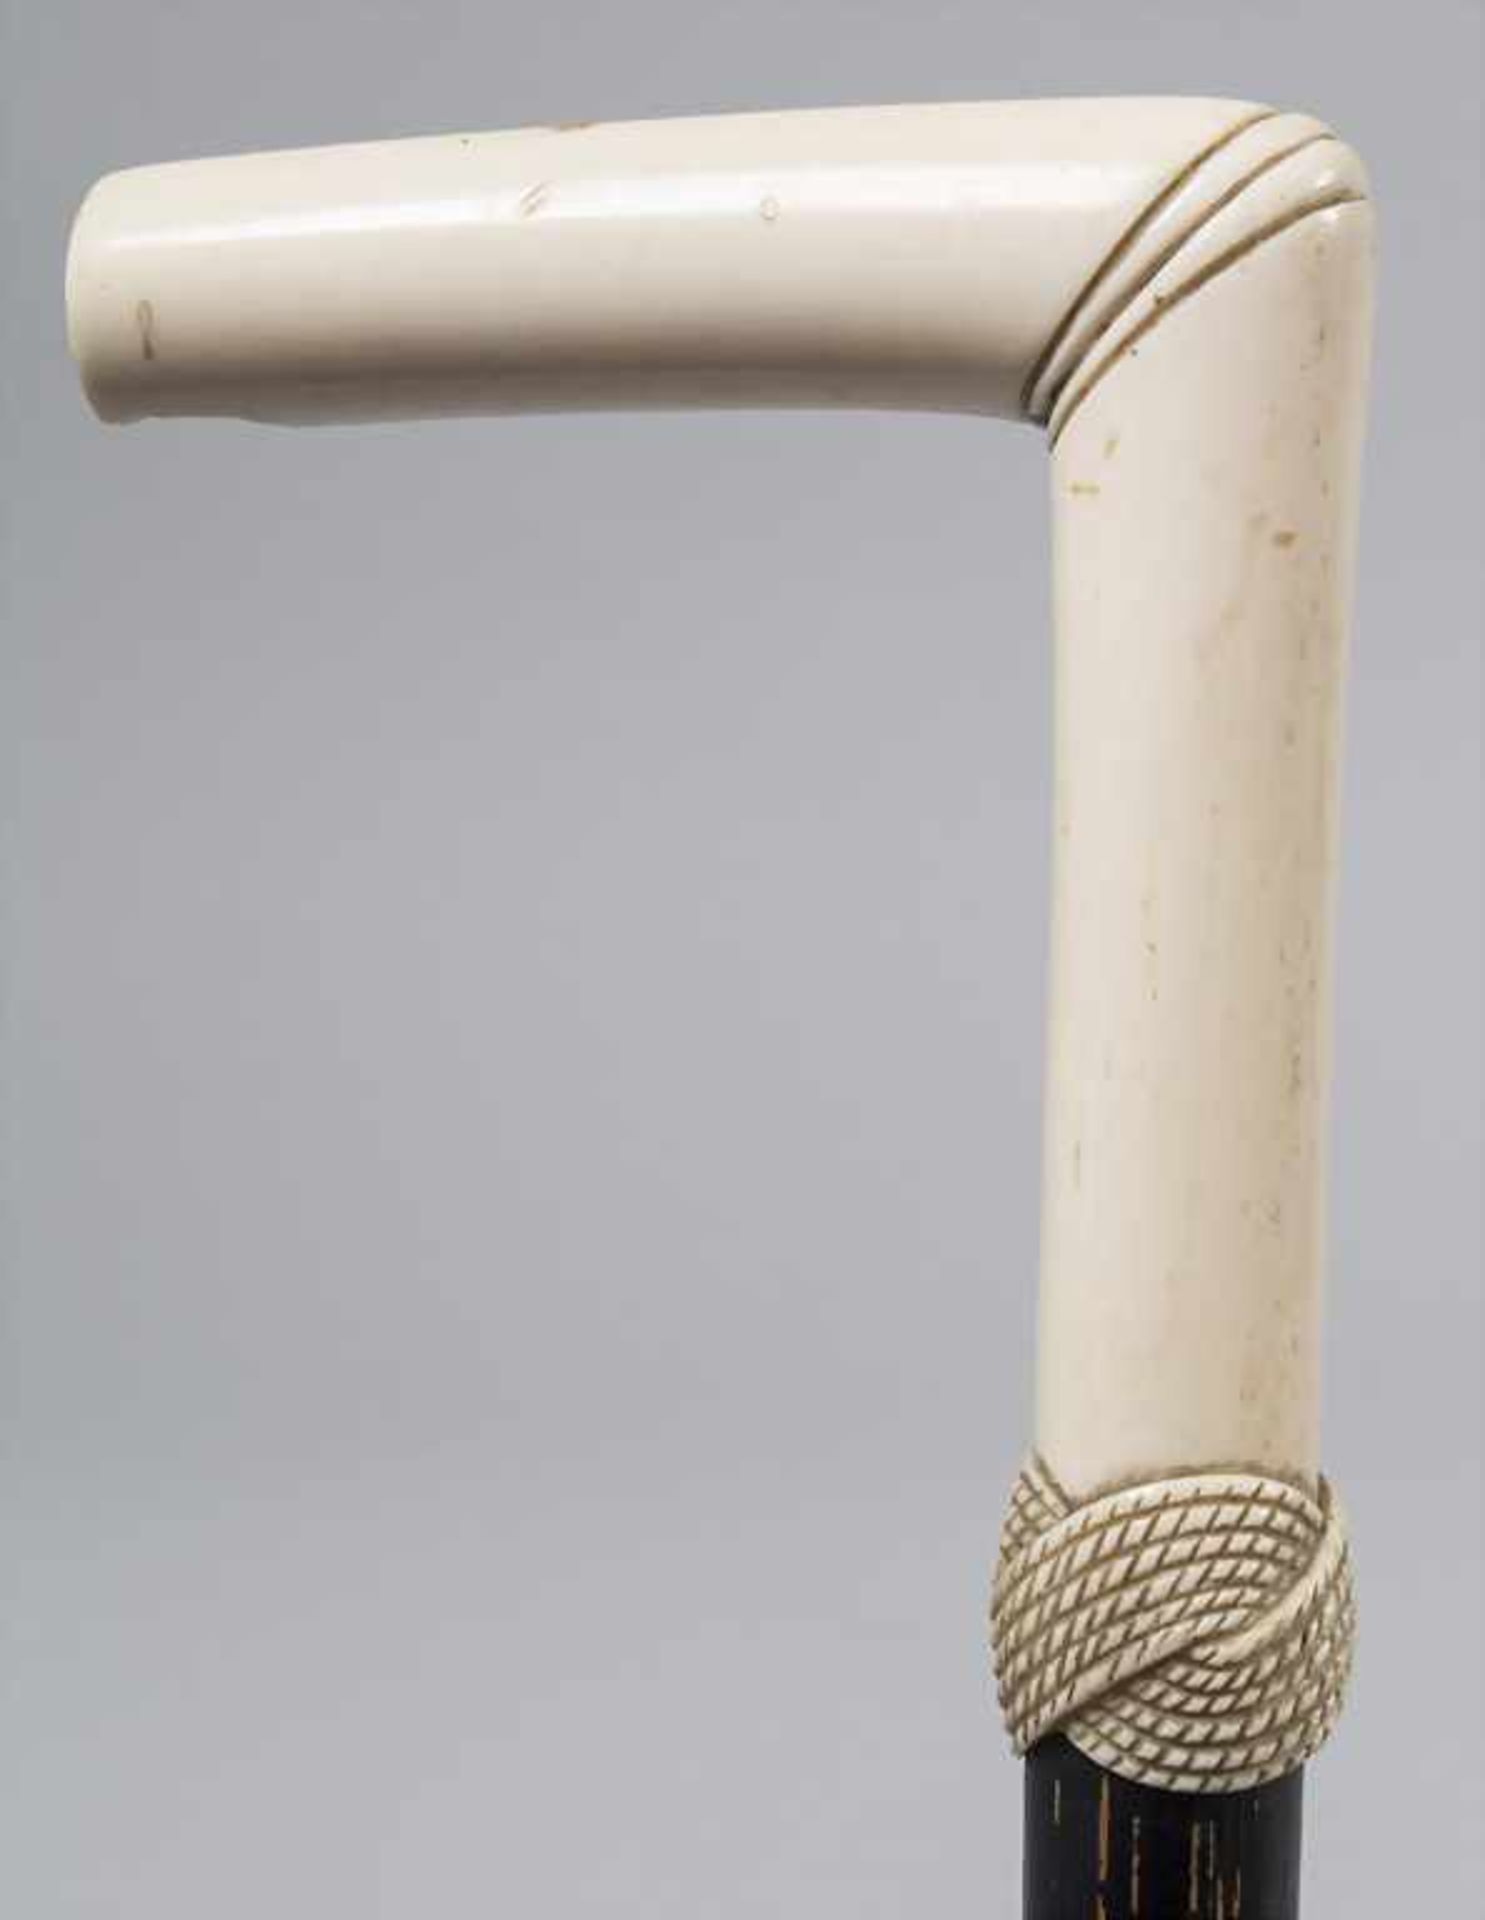 Sammlung 10 Gehstöcke / A collection of 10 canes with ivory handle - Bild 3 aus 27